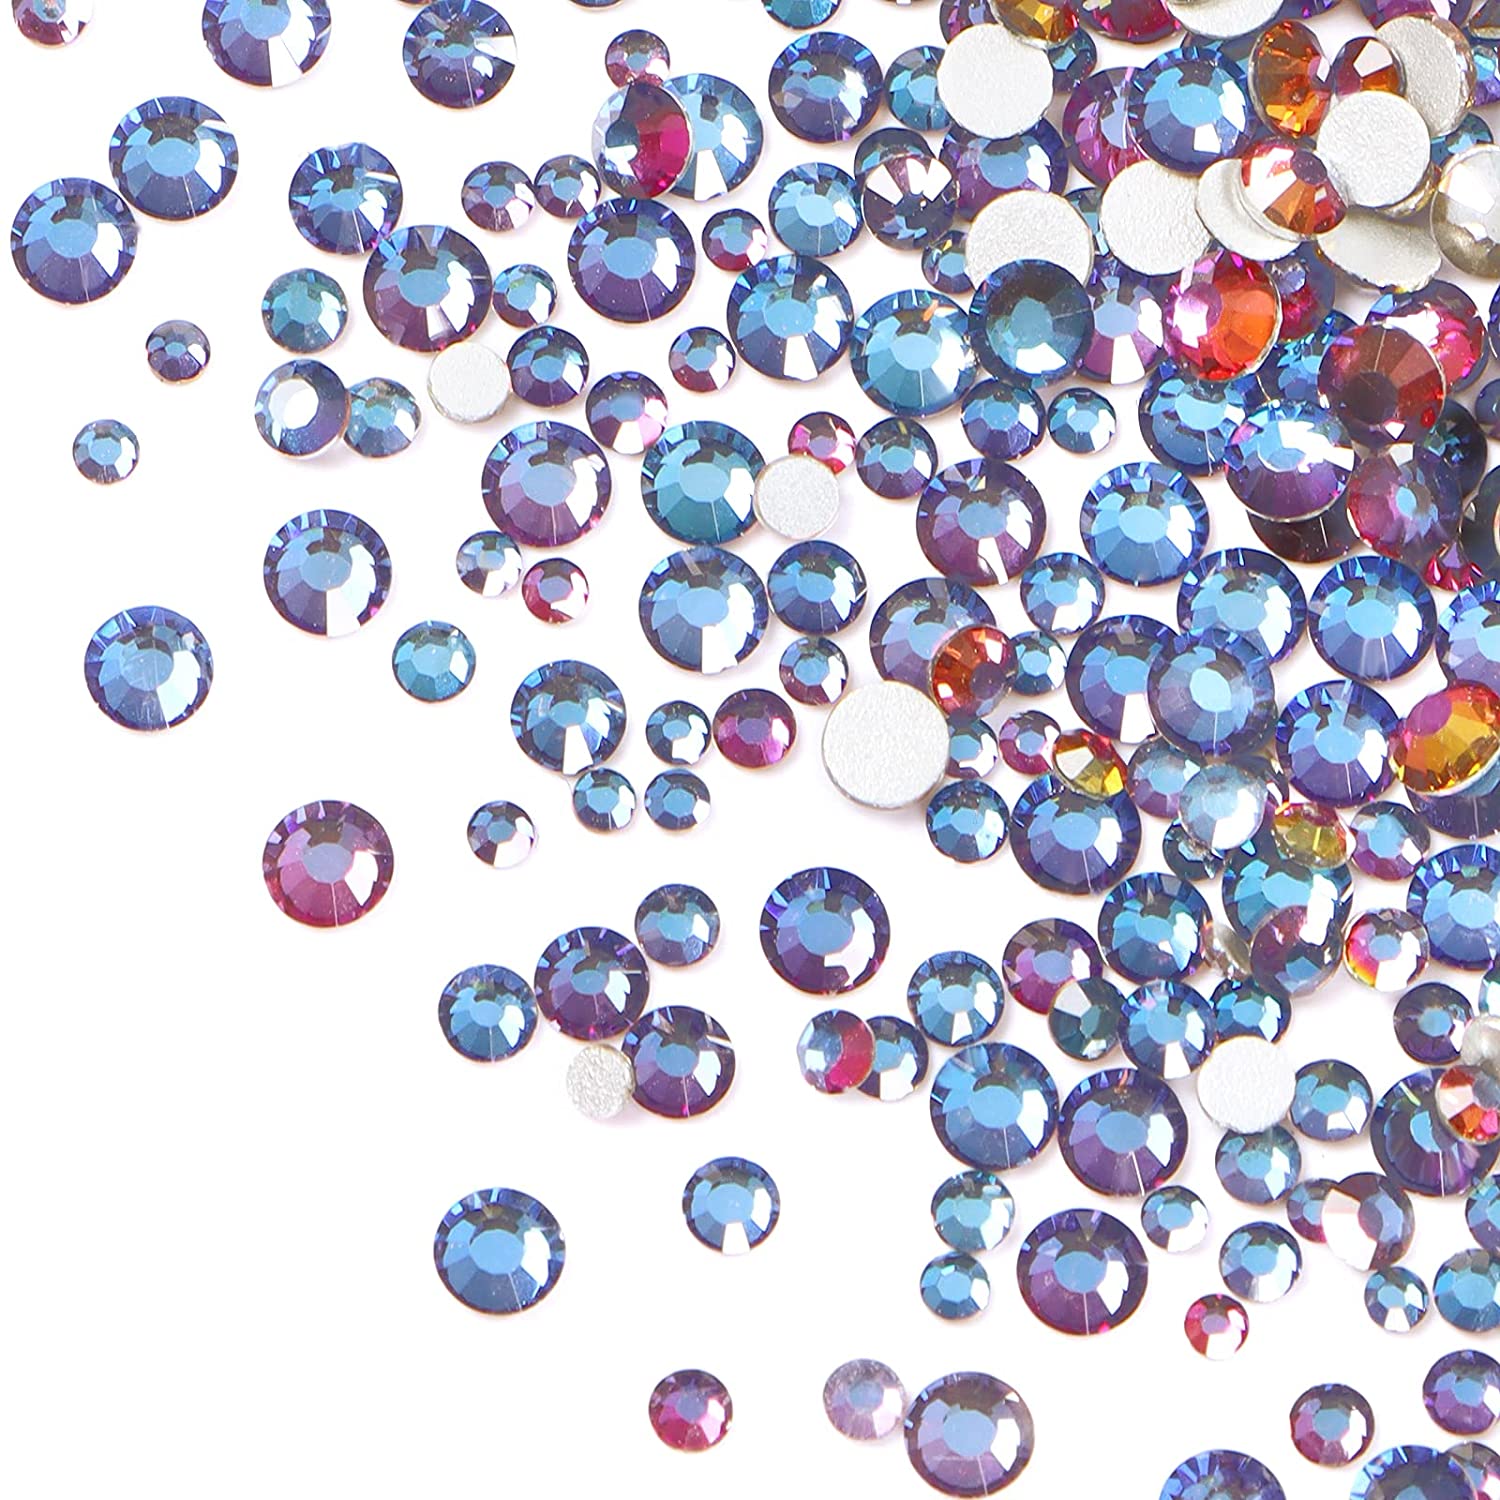 Jollin 3456pcs Flatback Rhinestones Glass Charms Diamantes Gems Stones for Nail Art 6 Size ss4~ss12 Crystal AB